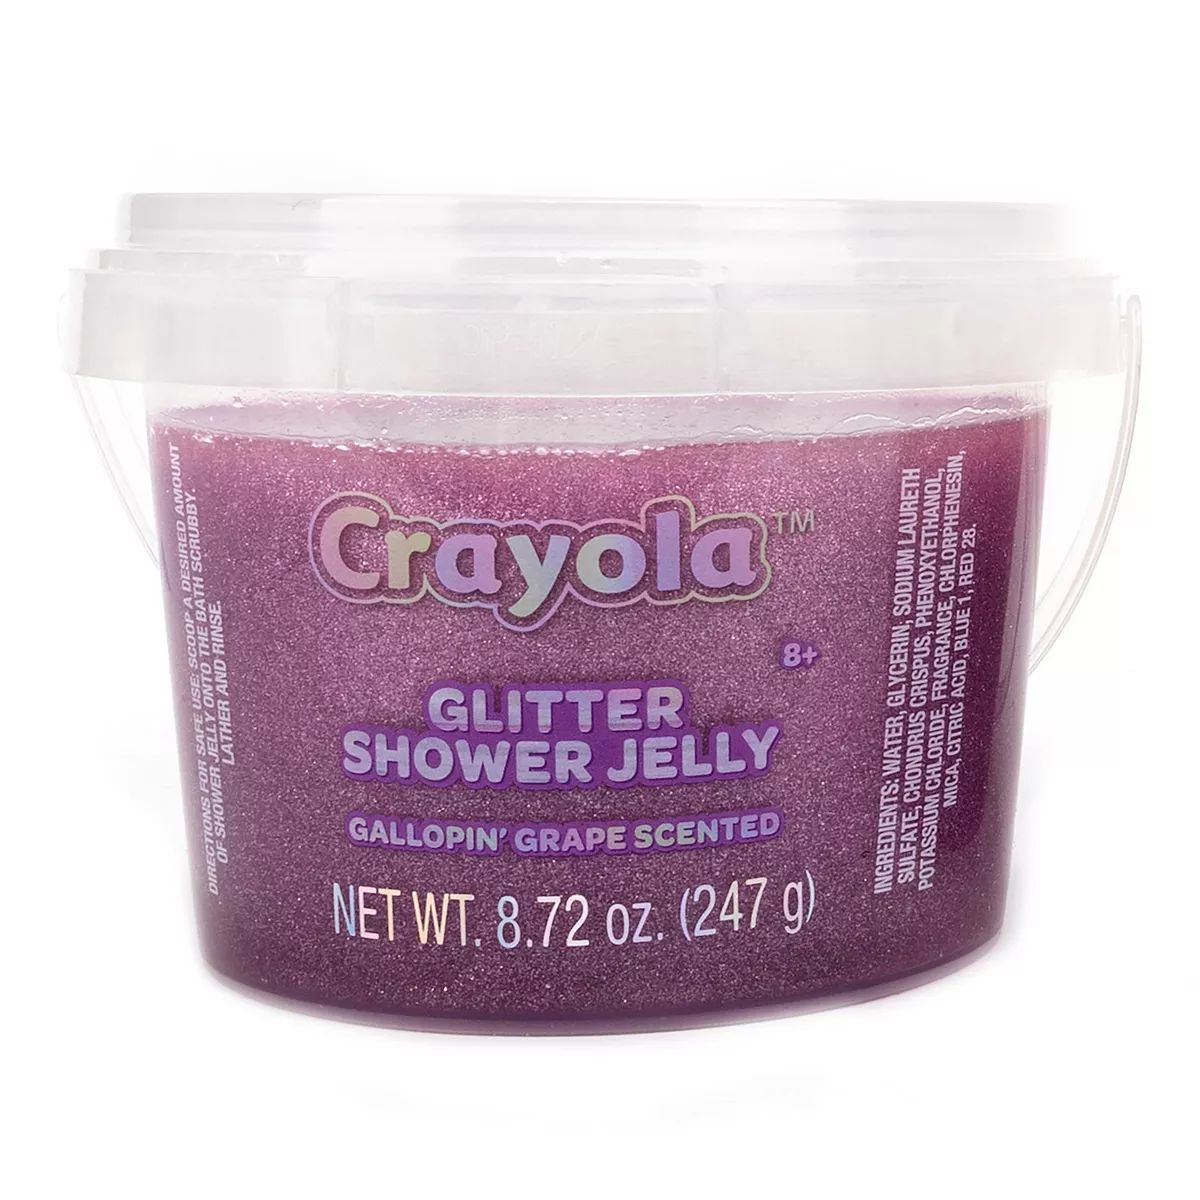 Crayola Glitter Shower Jelly - Gallopin' Grape | Kohl's